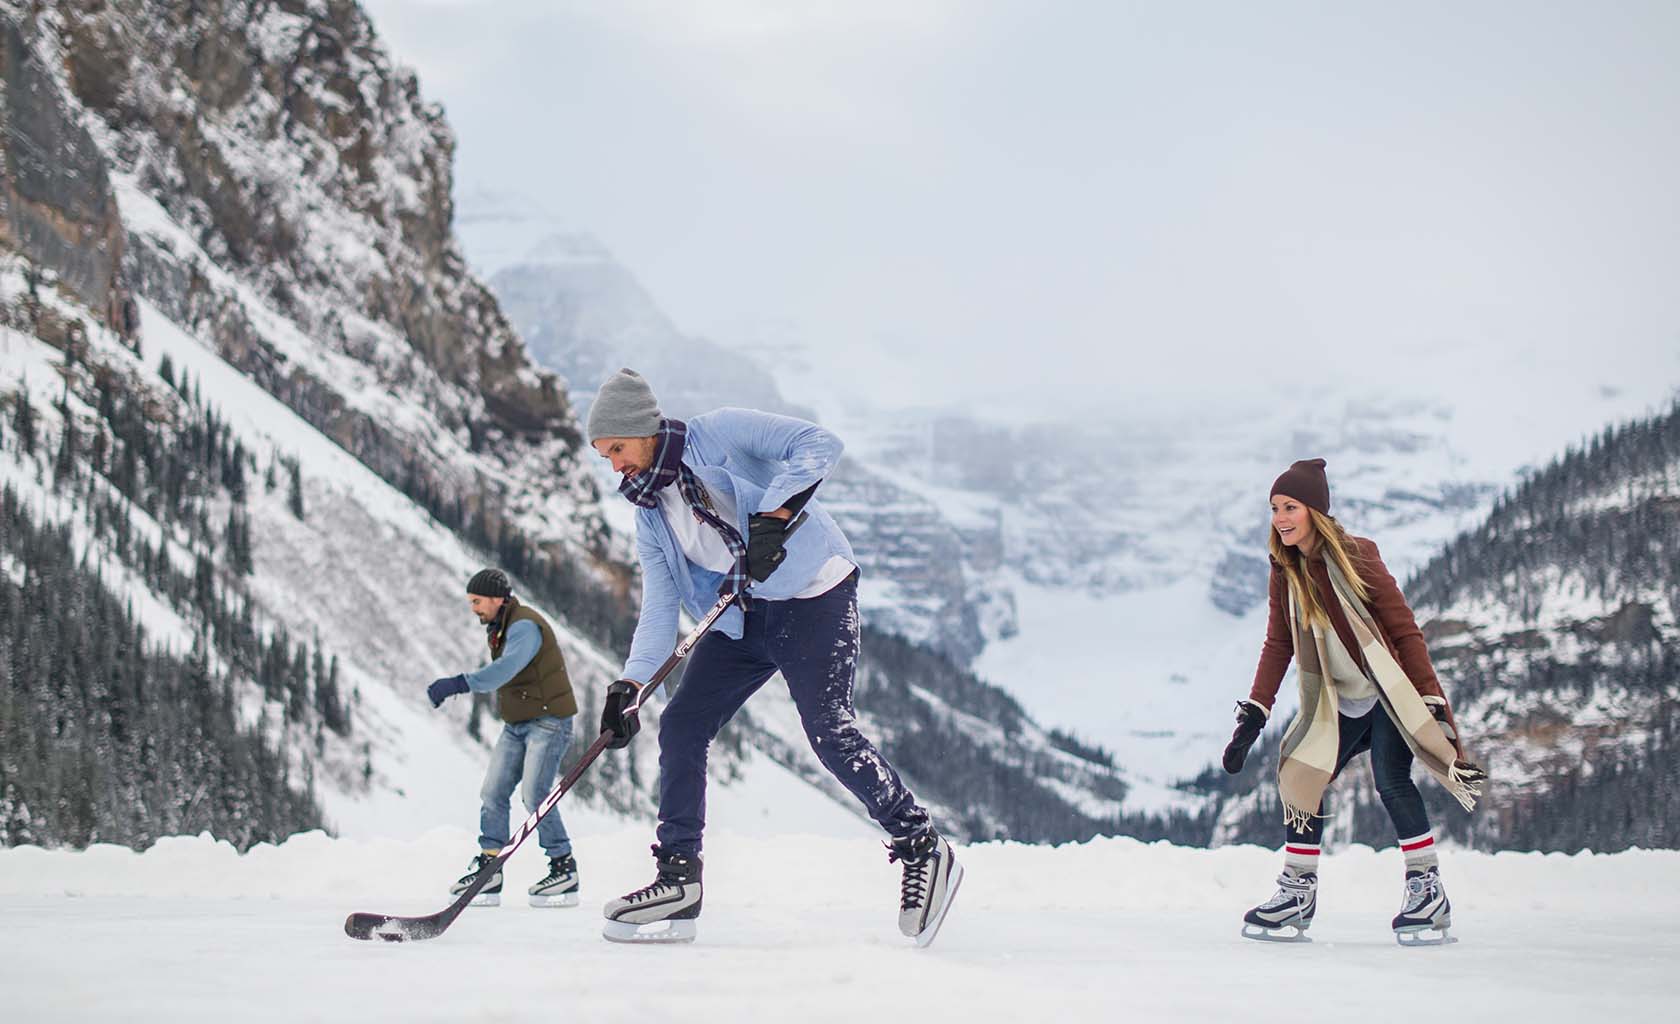 Ice skating in Banff National Park